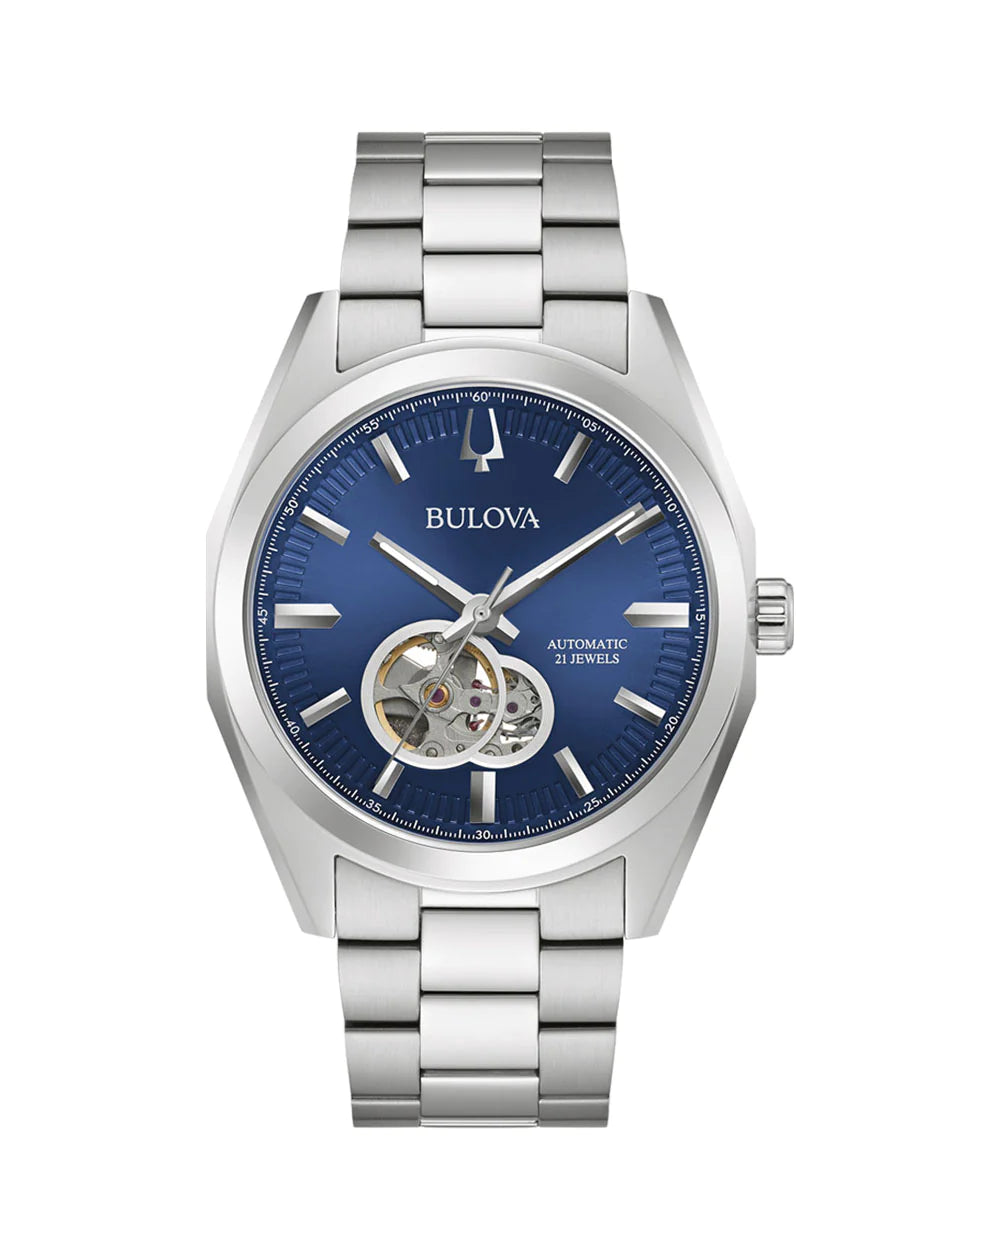 New Bulova Men's Automatic Watch